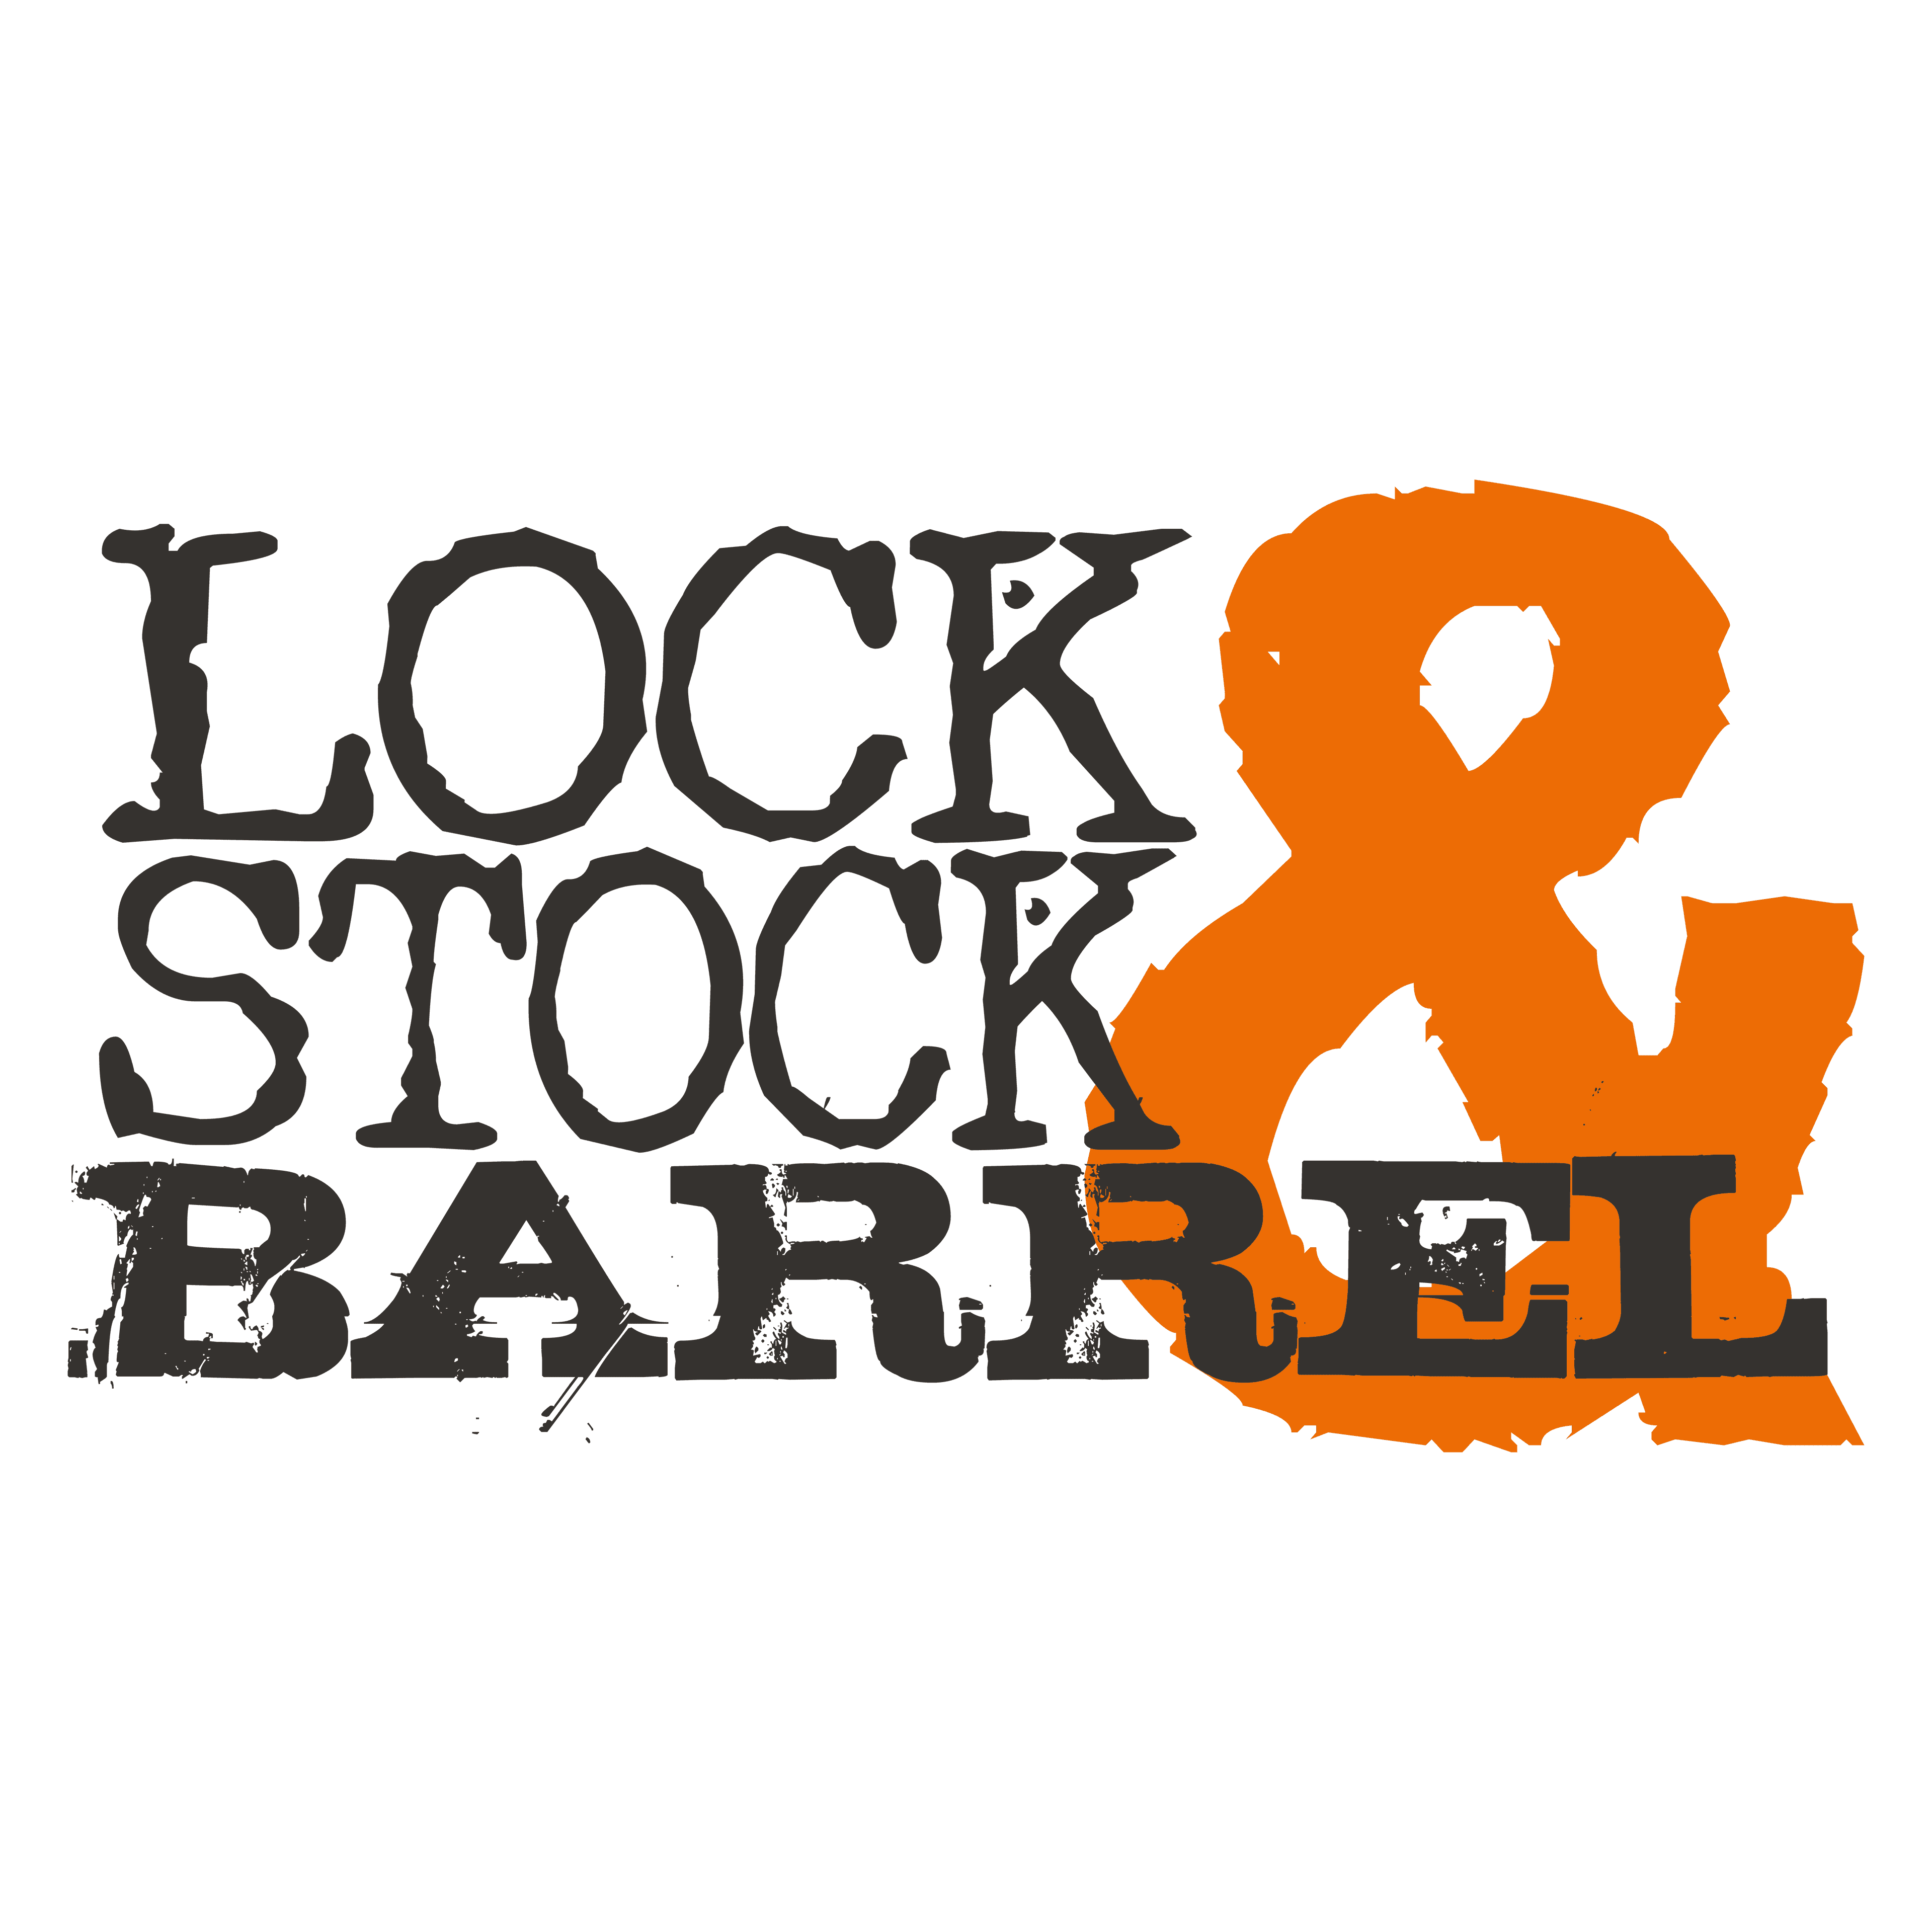 Lock Stock & Barrel JBR